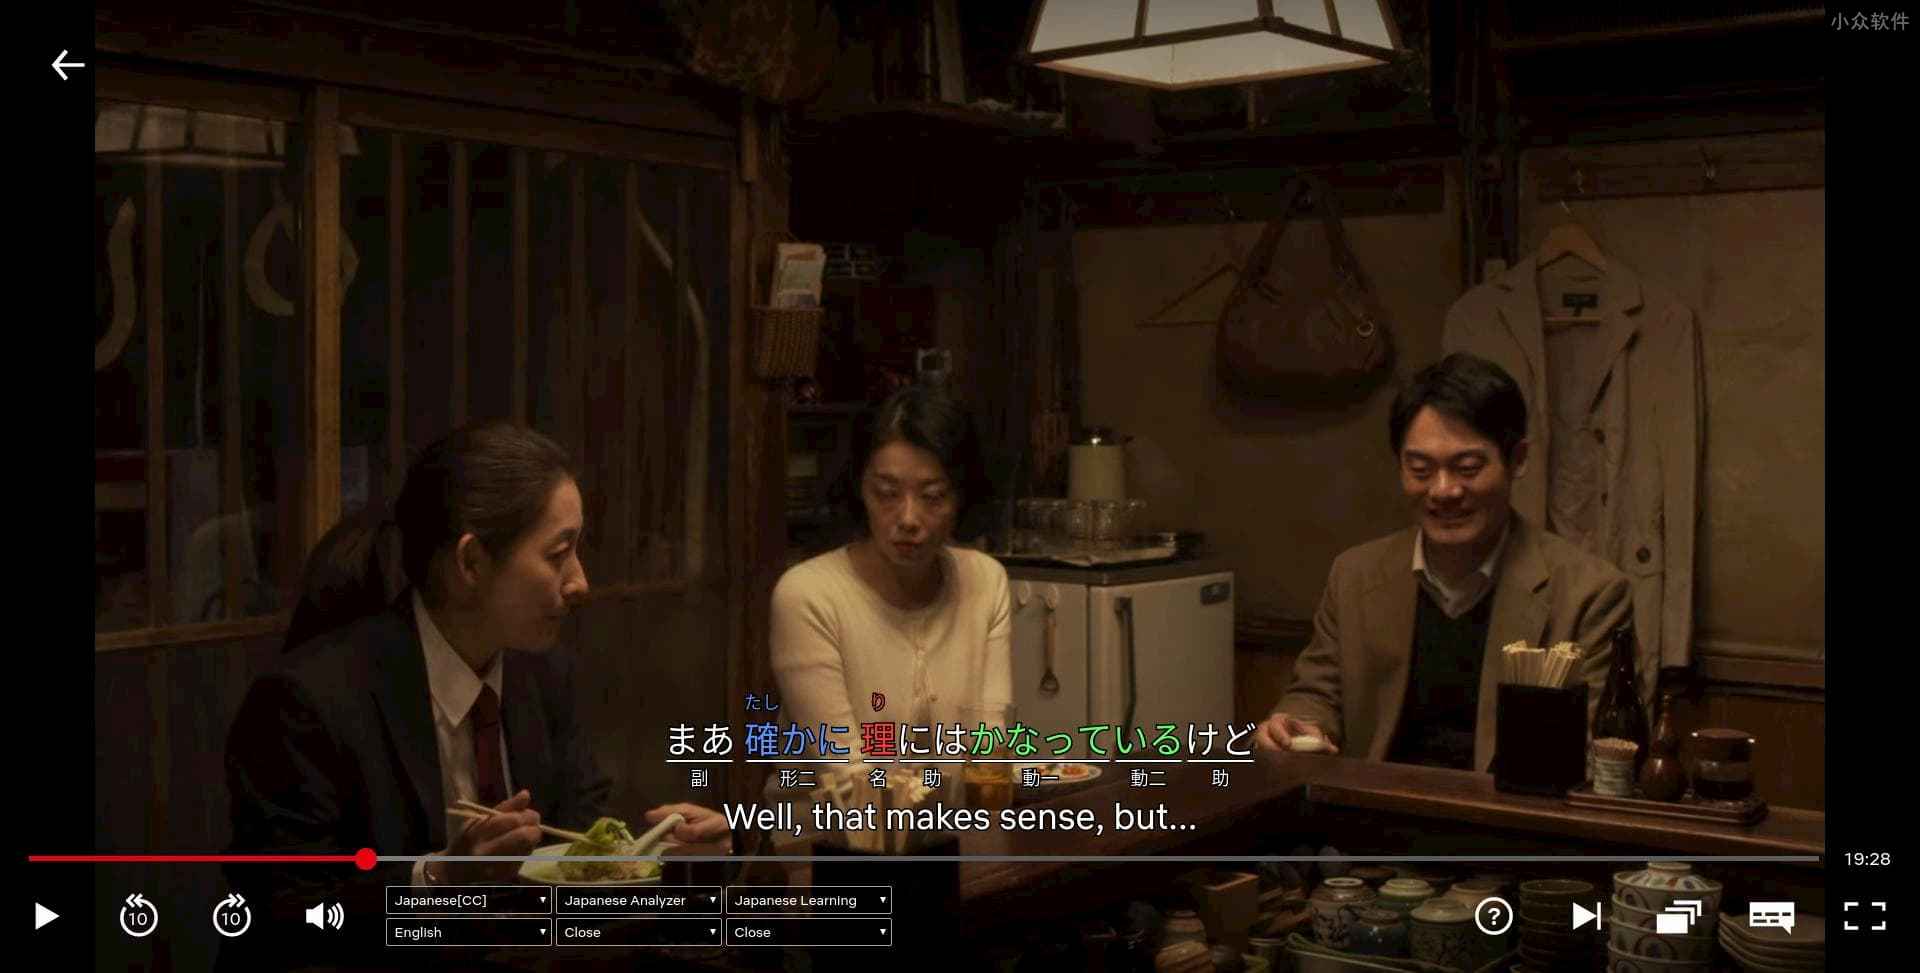 Netsub - 为 Netflix 显示双语字幕，并可显示拼音、平假名用来学习中文、日语[Chrome/Edge] 3